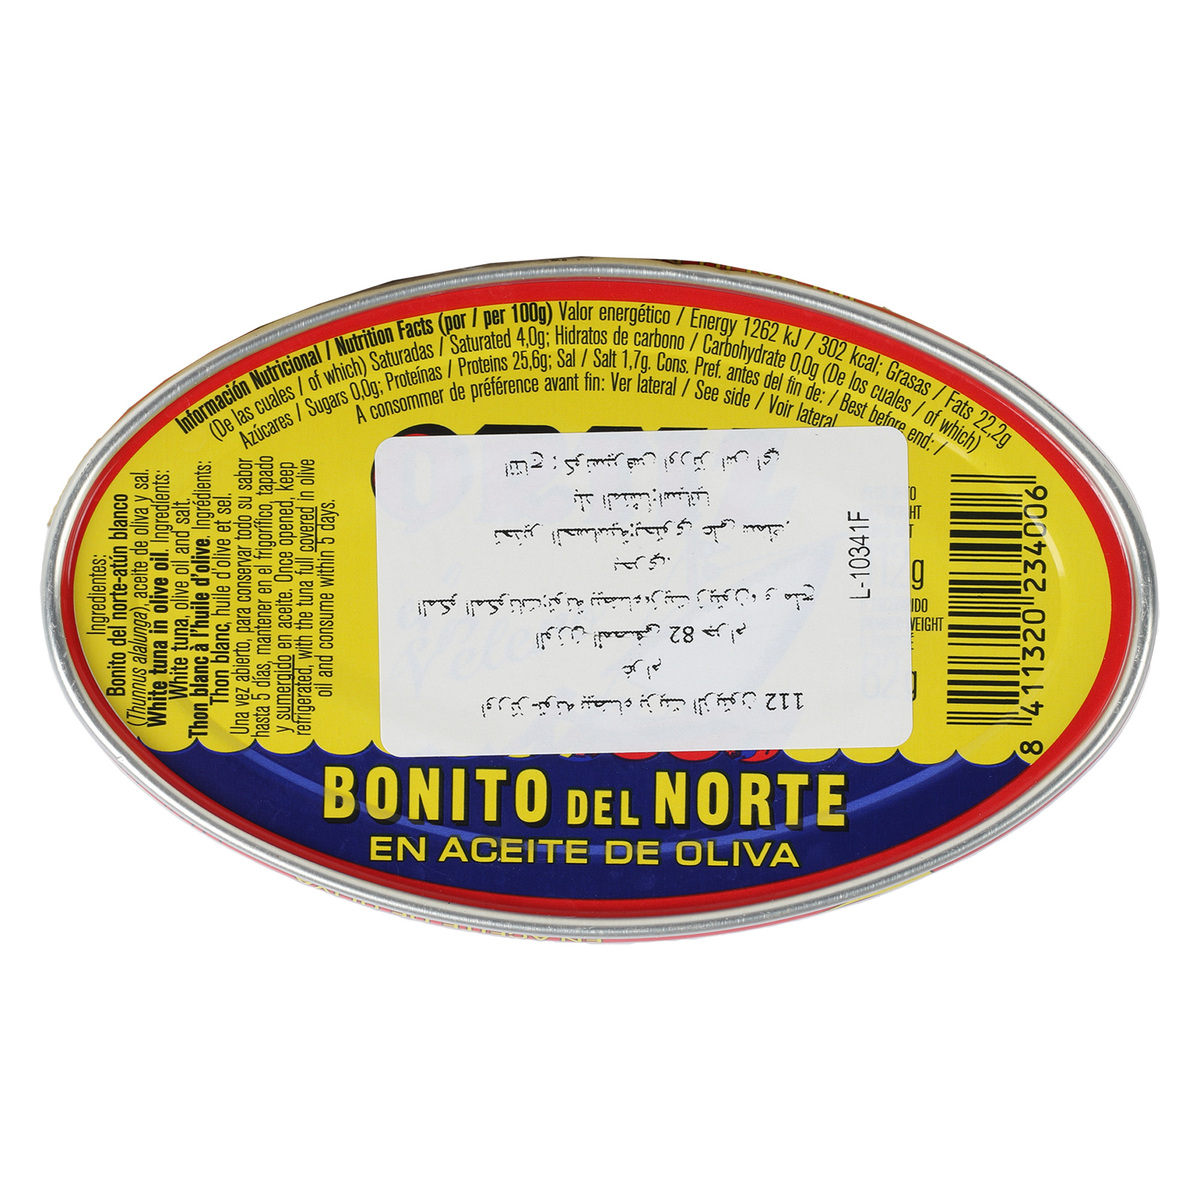 Ortiz White Meat Tuna In Olive Oil 112 g